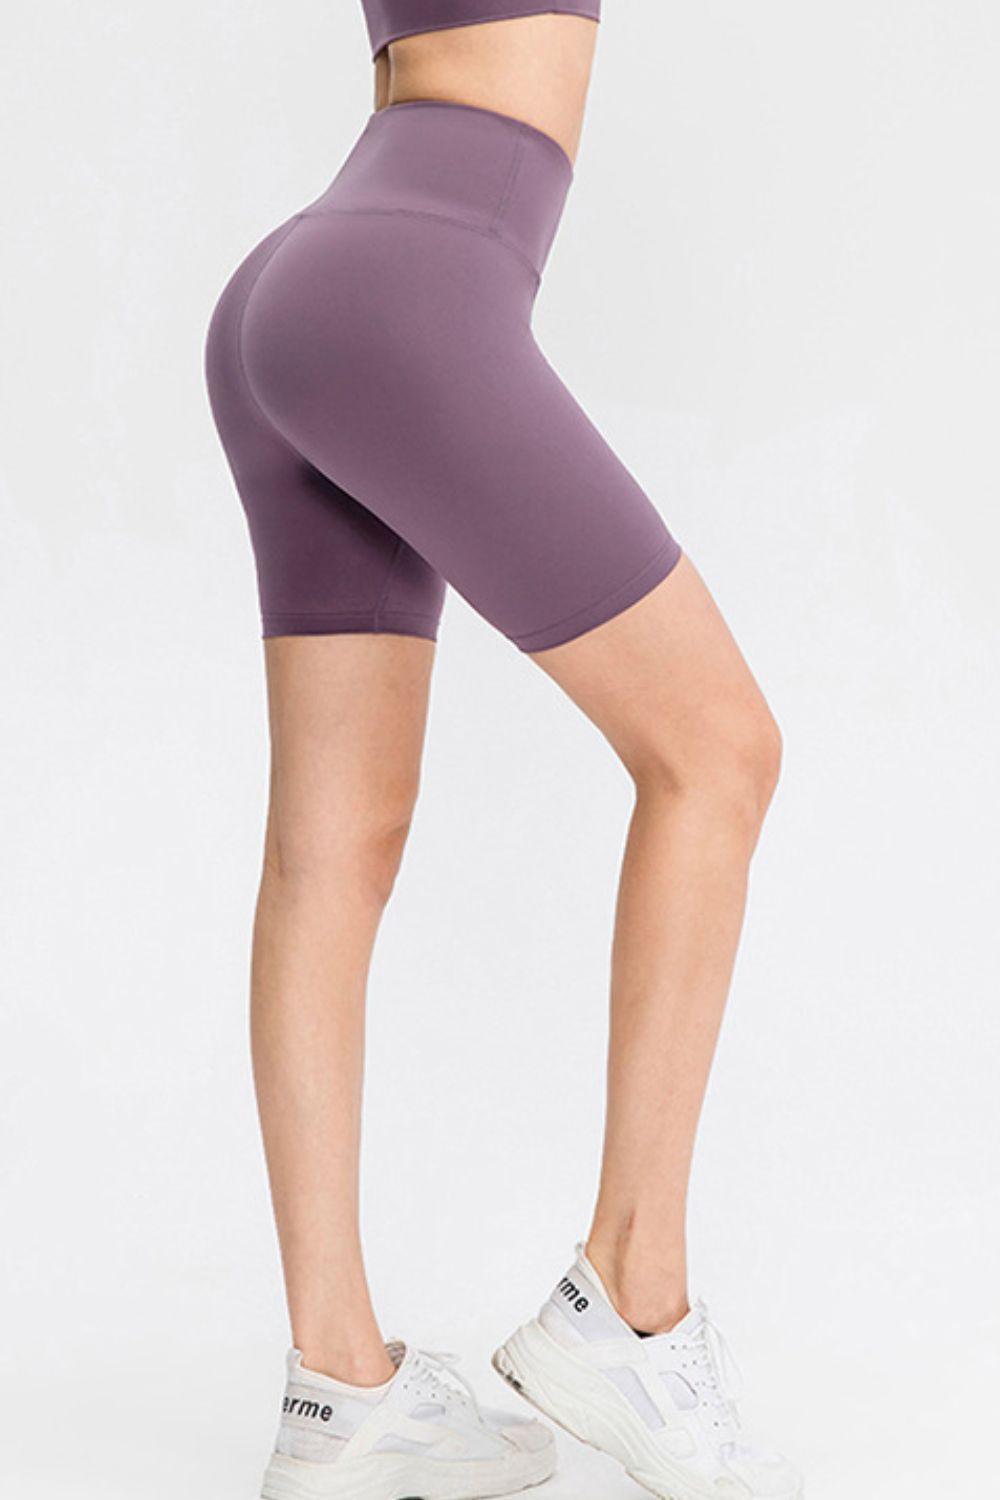 Full Performance Slim Fit High Waisted Yoga Shorts - MXSTUDIO.COM